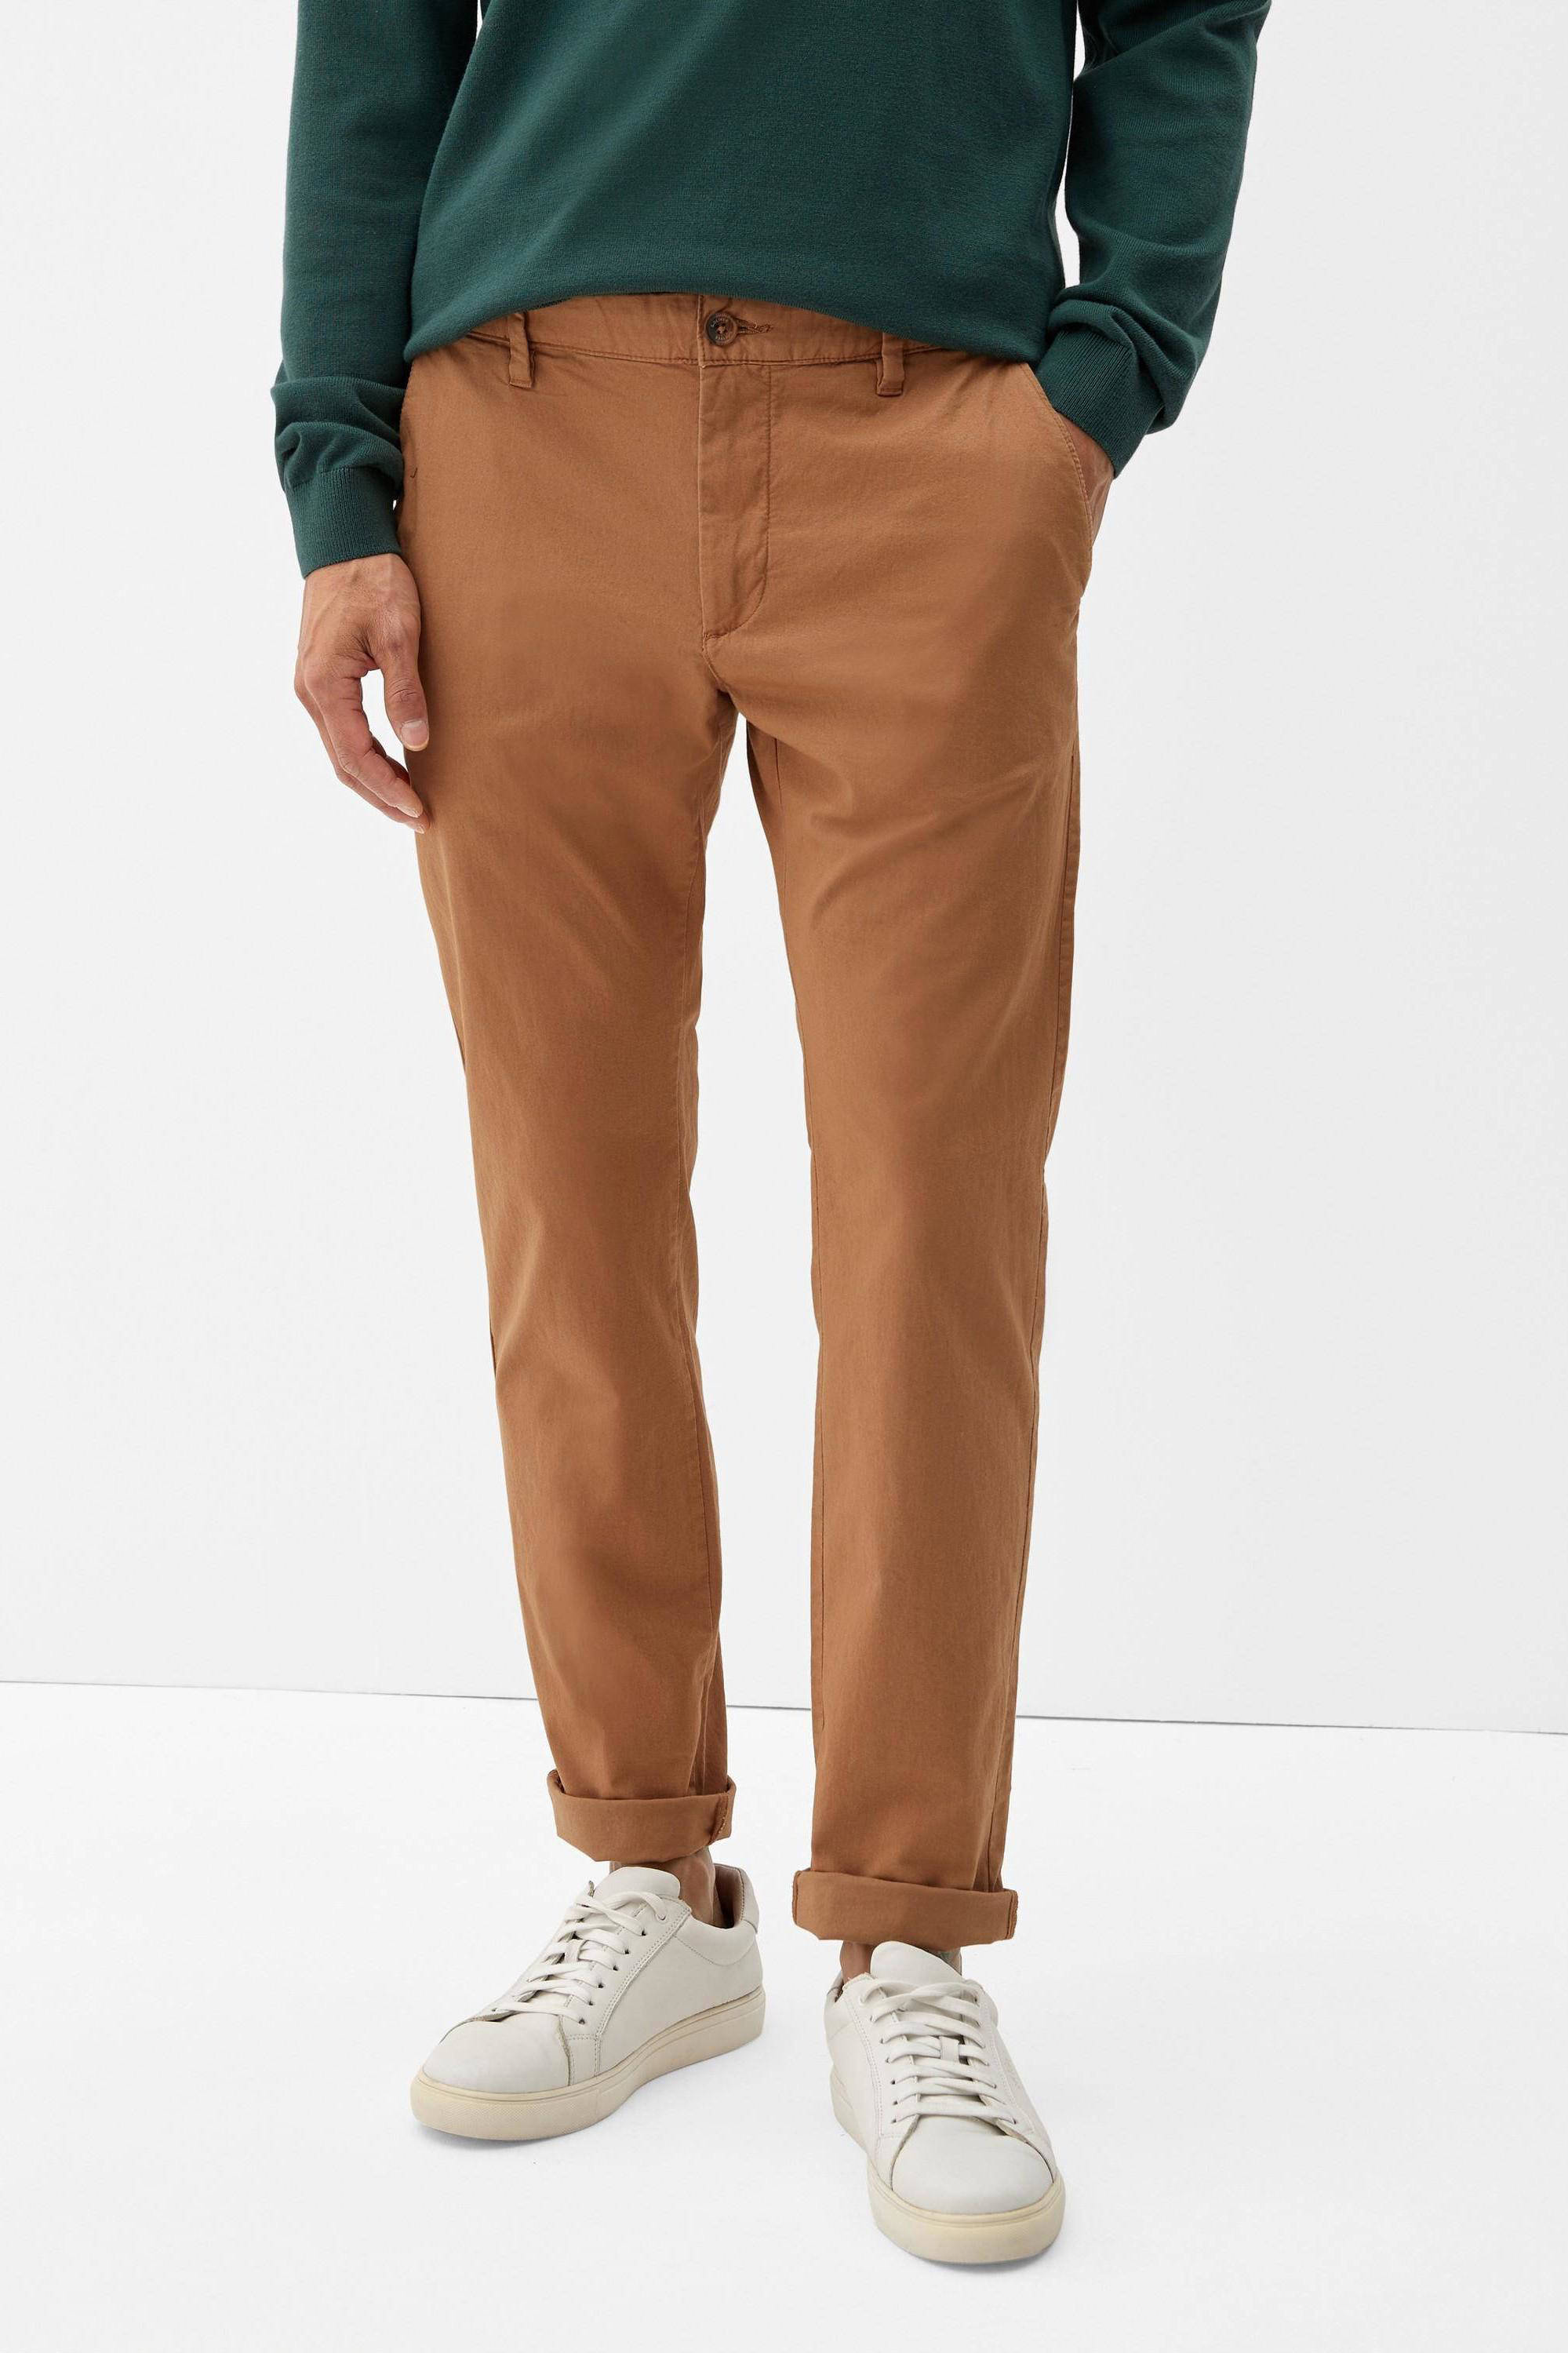 s.Oliver Pantalon antraciet zakelijke stijl Mode Pakken Pantalons 